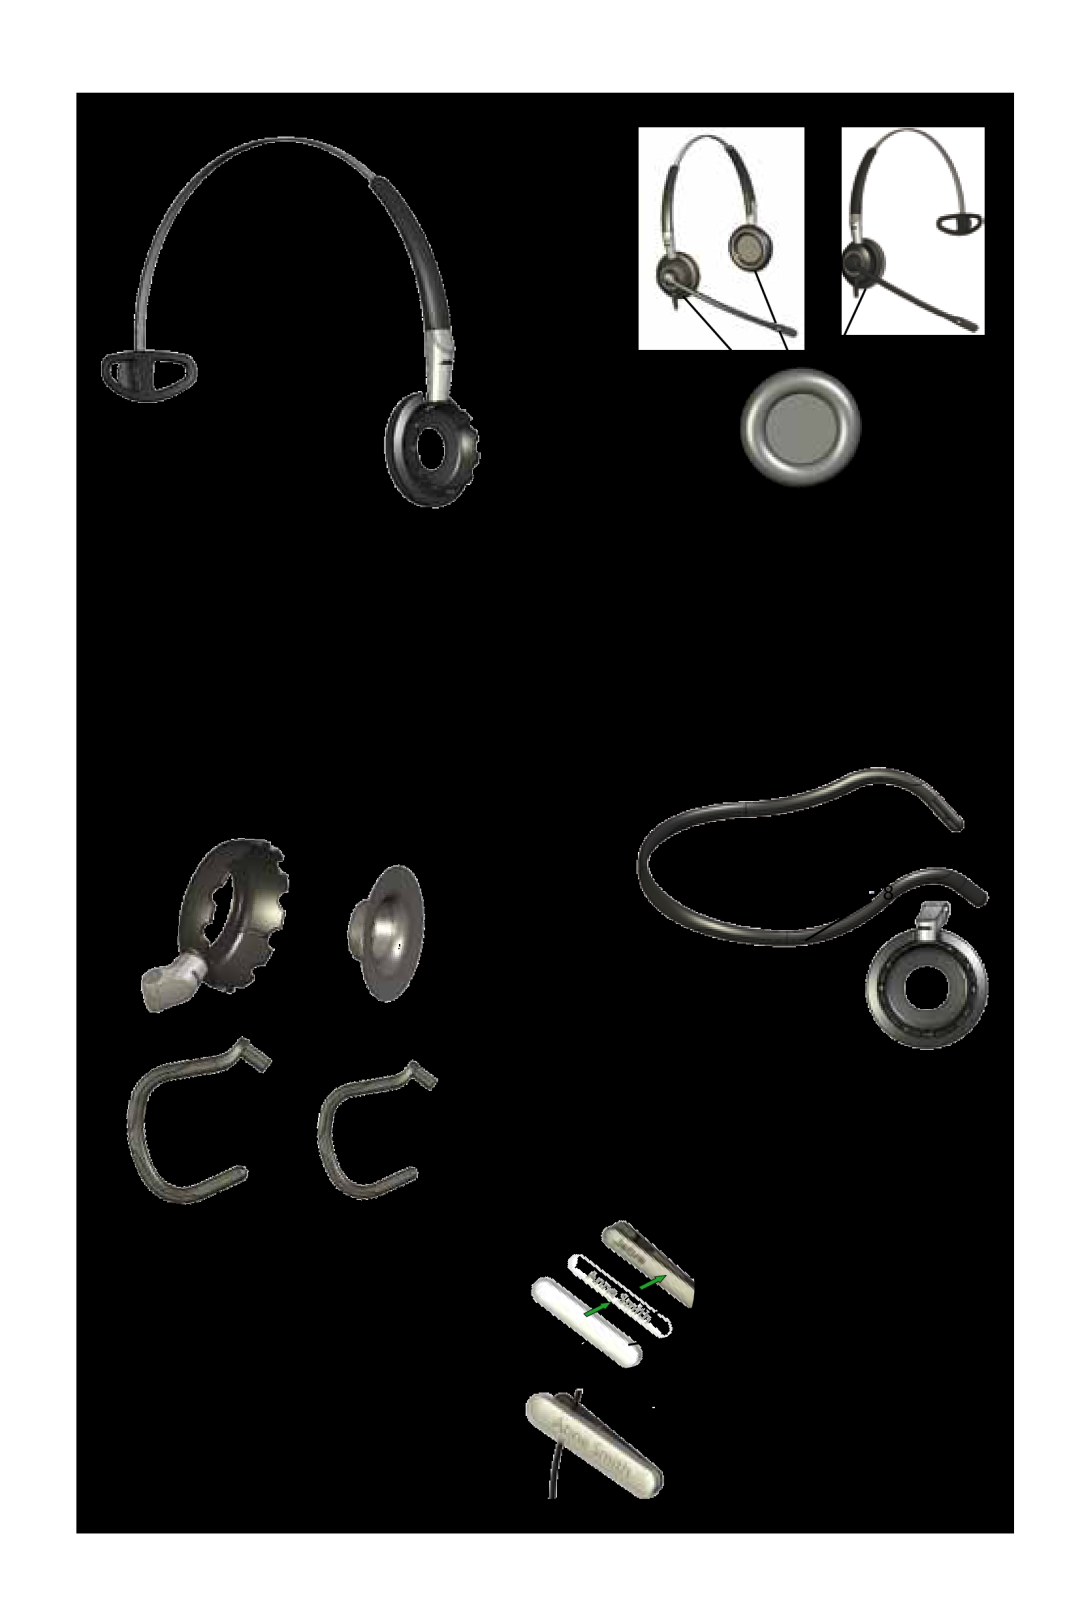 Jabra 2400 Headband Assembly, Ear hook Assembly, Neckband Assembly, Clothing Clip, Headband Ear cushion, Ear hook ring 